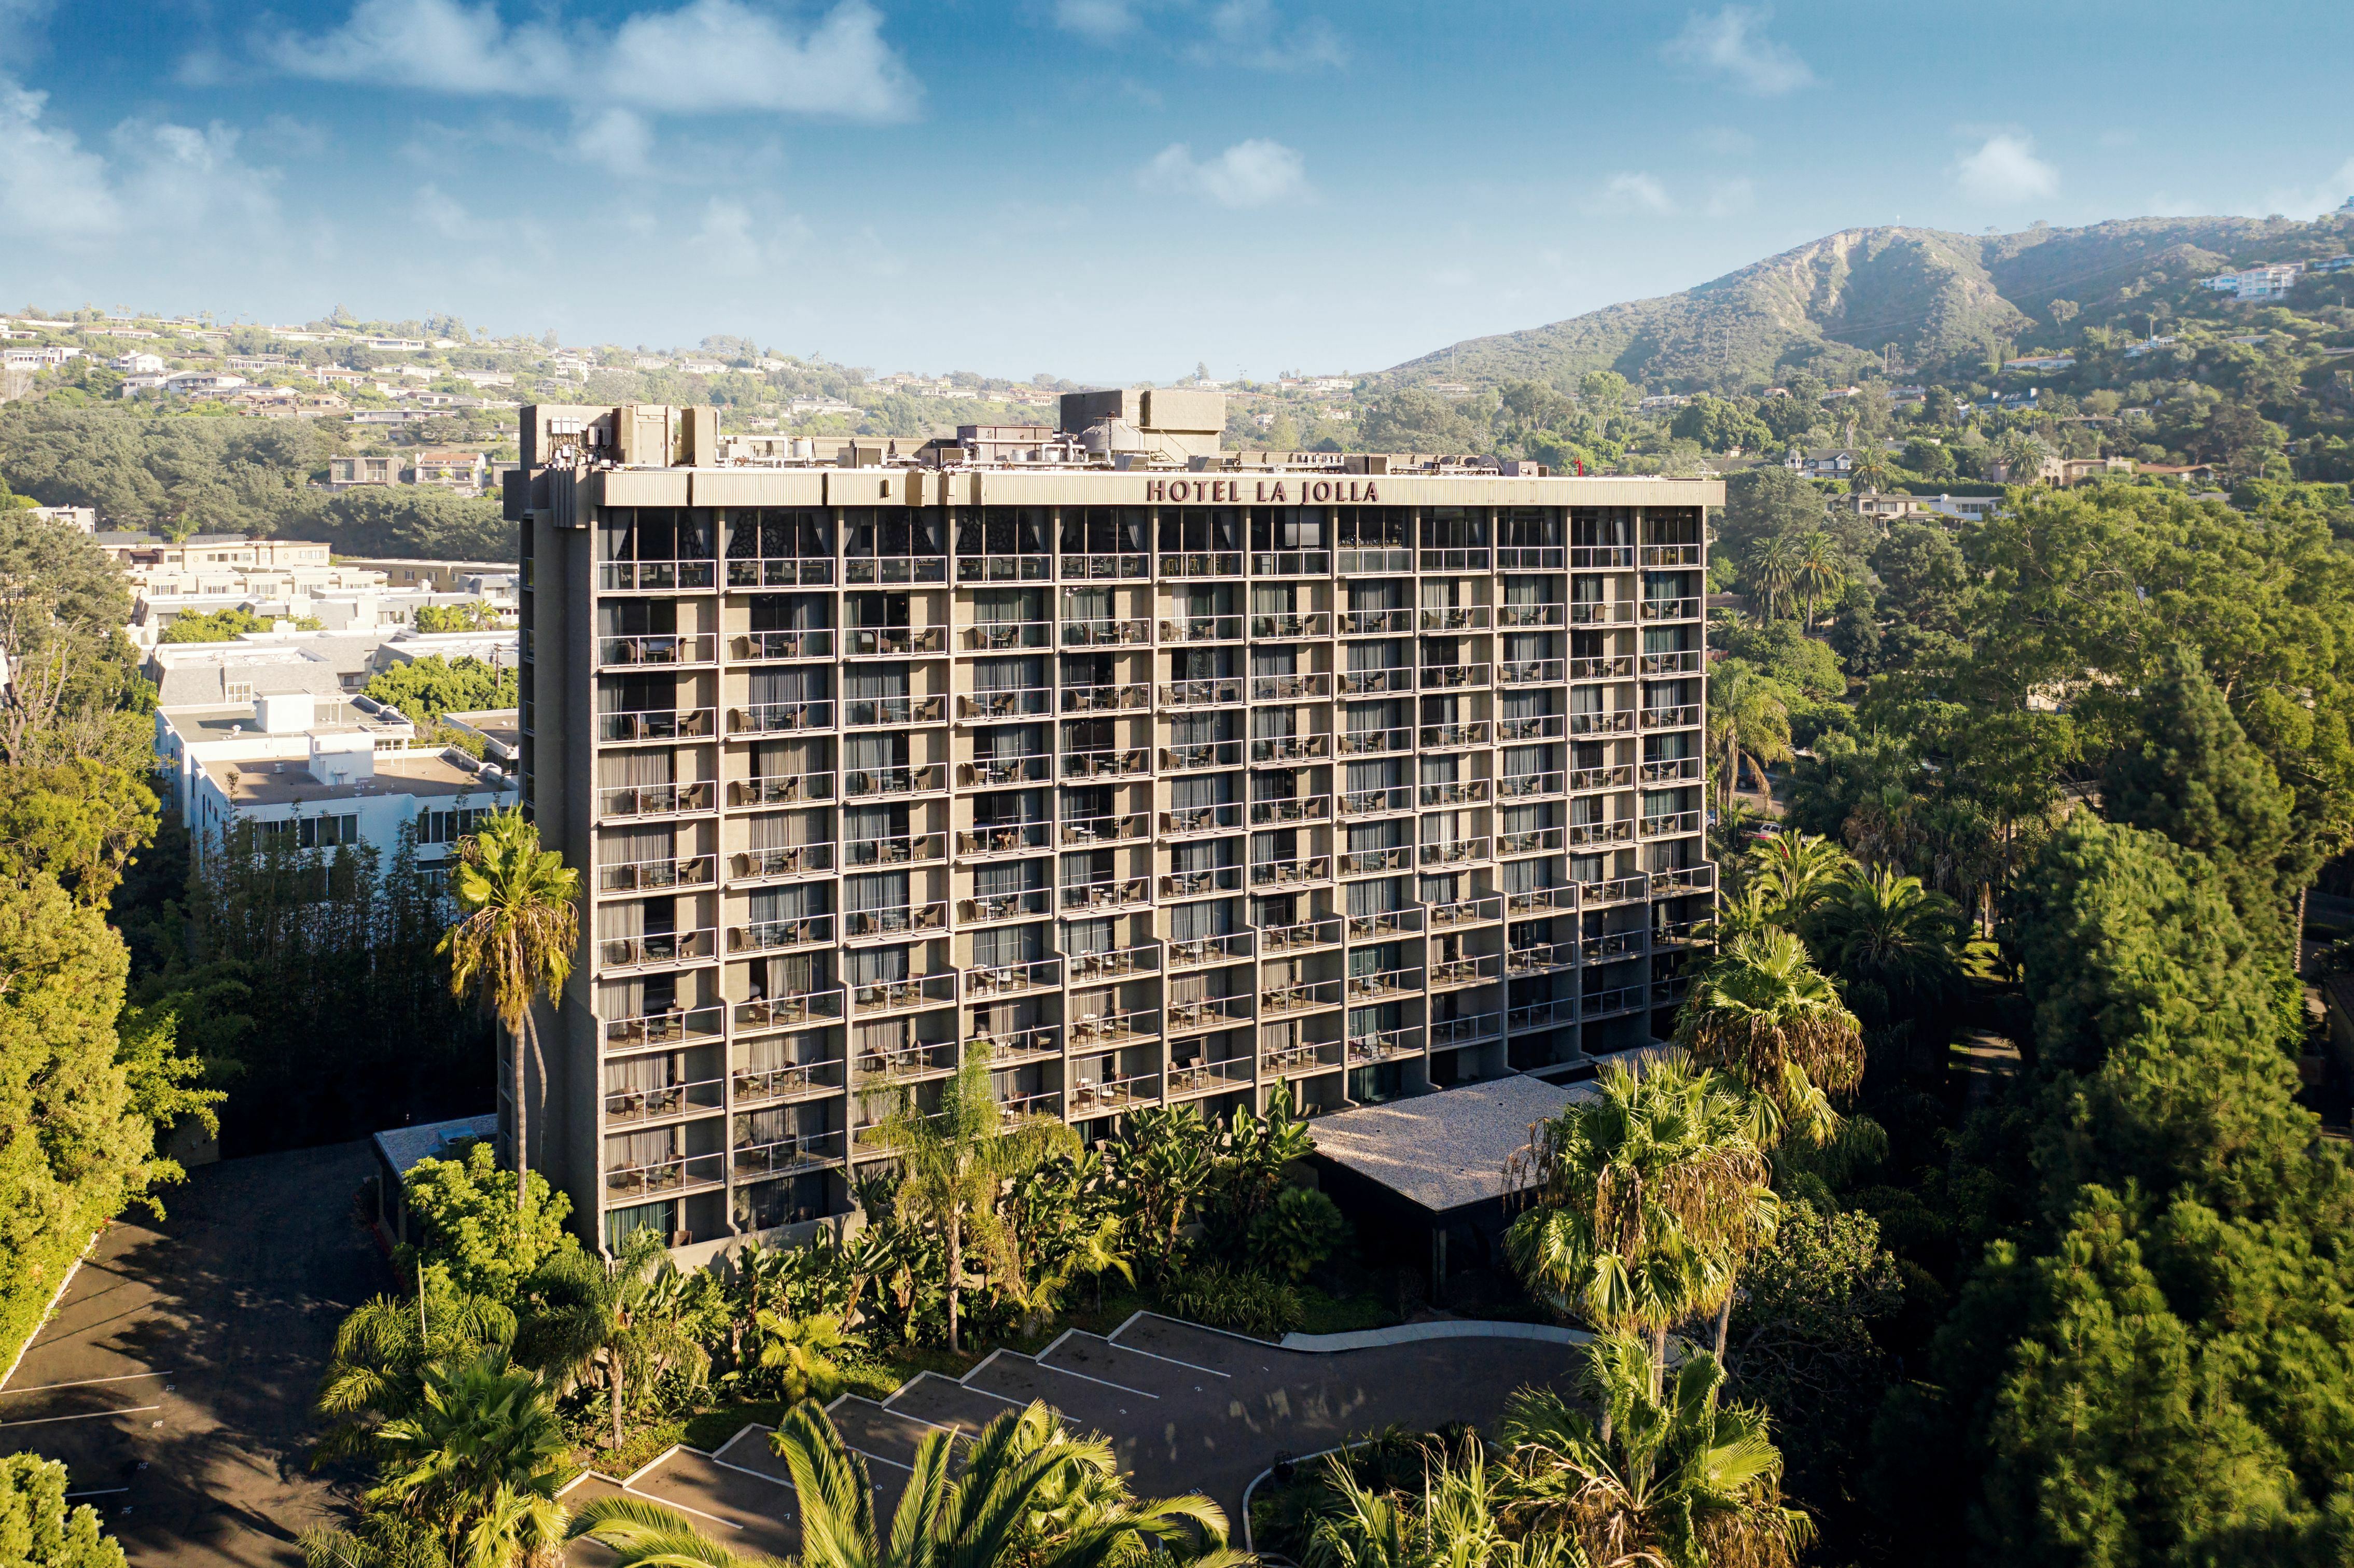 Photo of Hotel La Jolla, Curio Collection by Hilton, La Jolla, CA